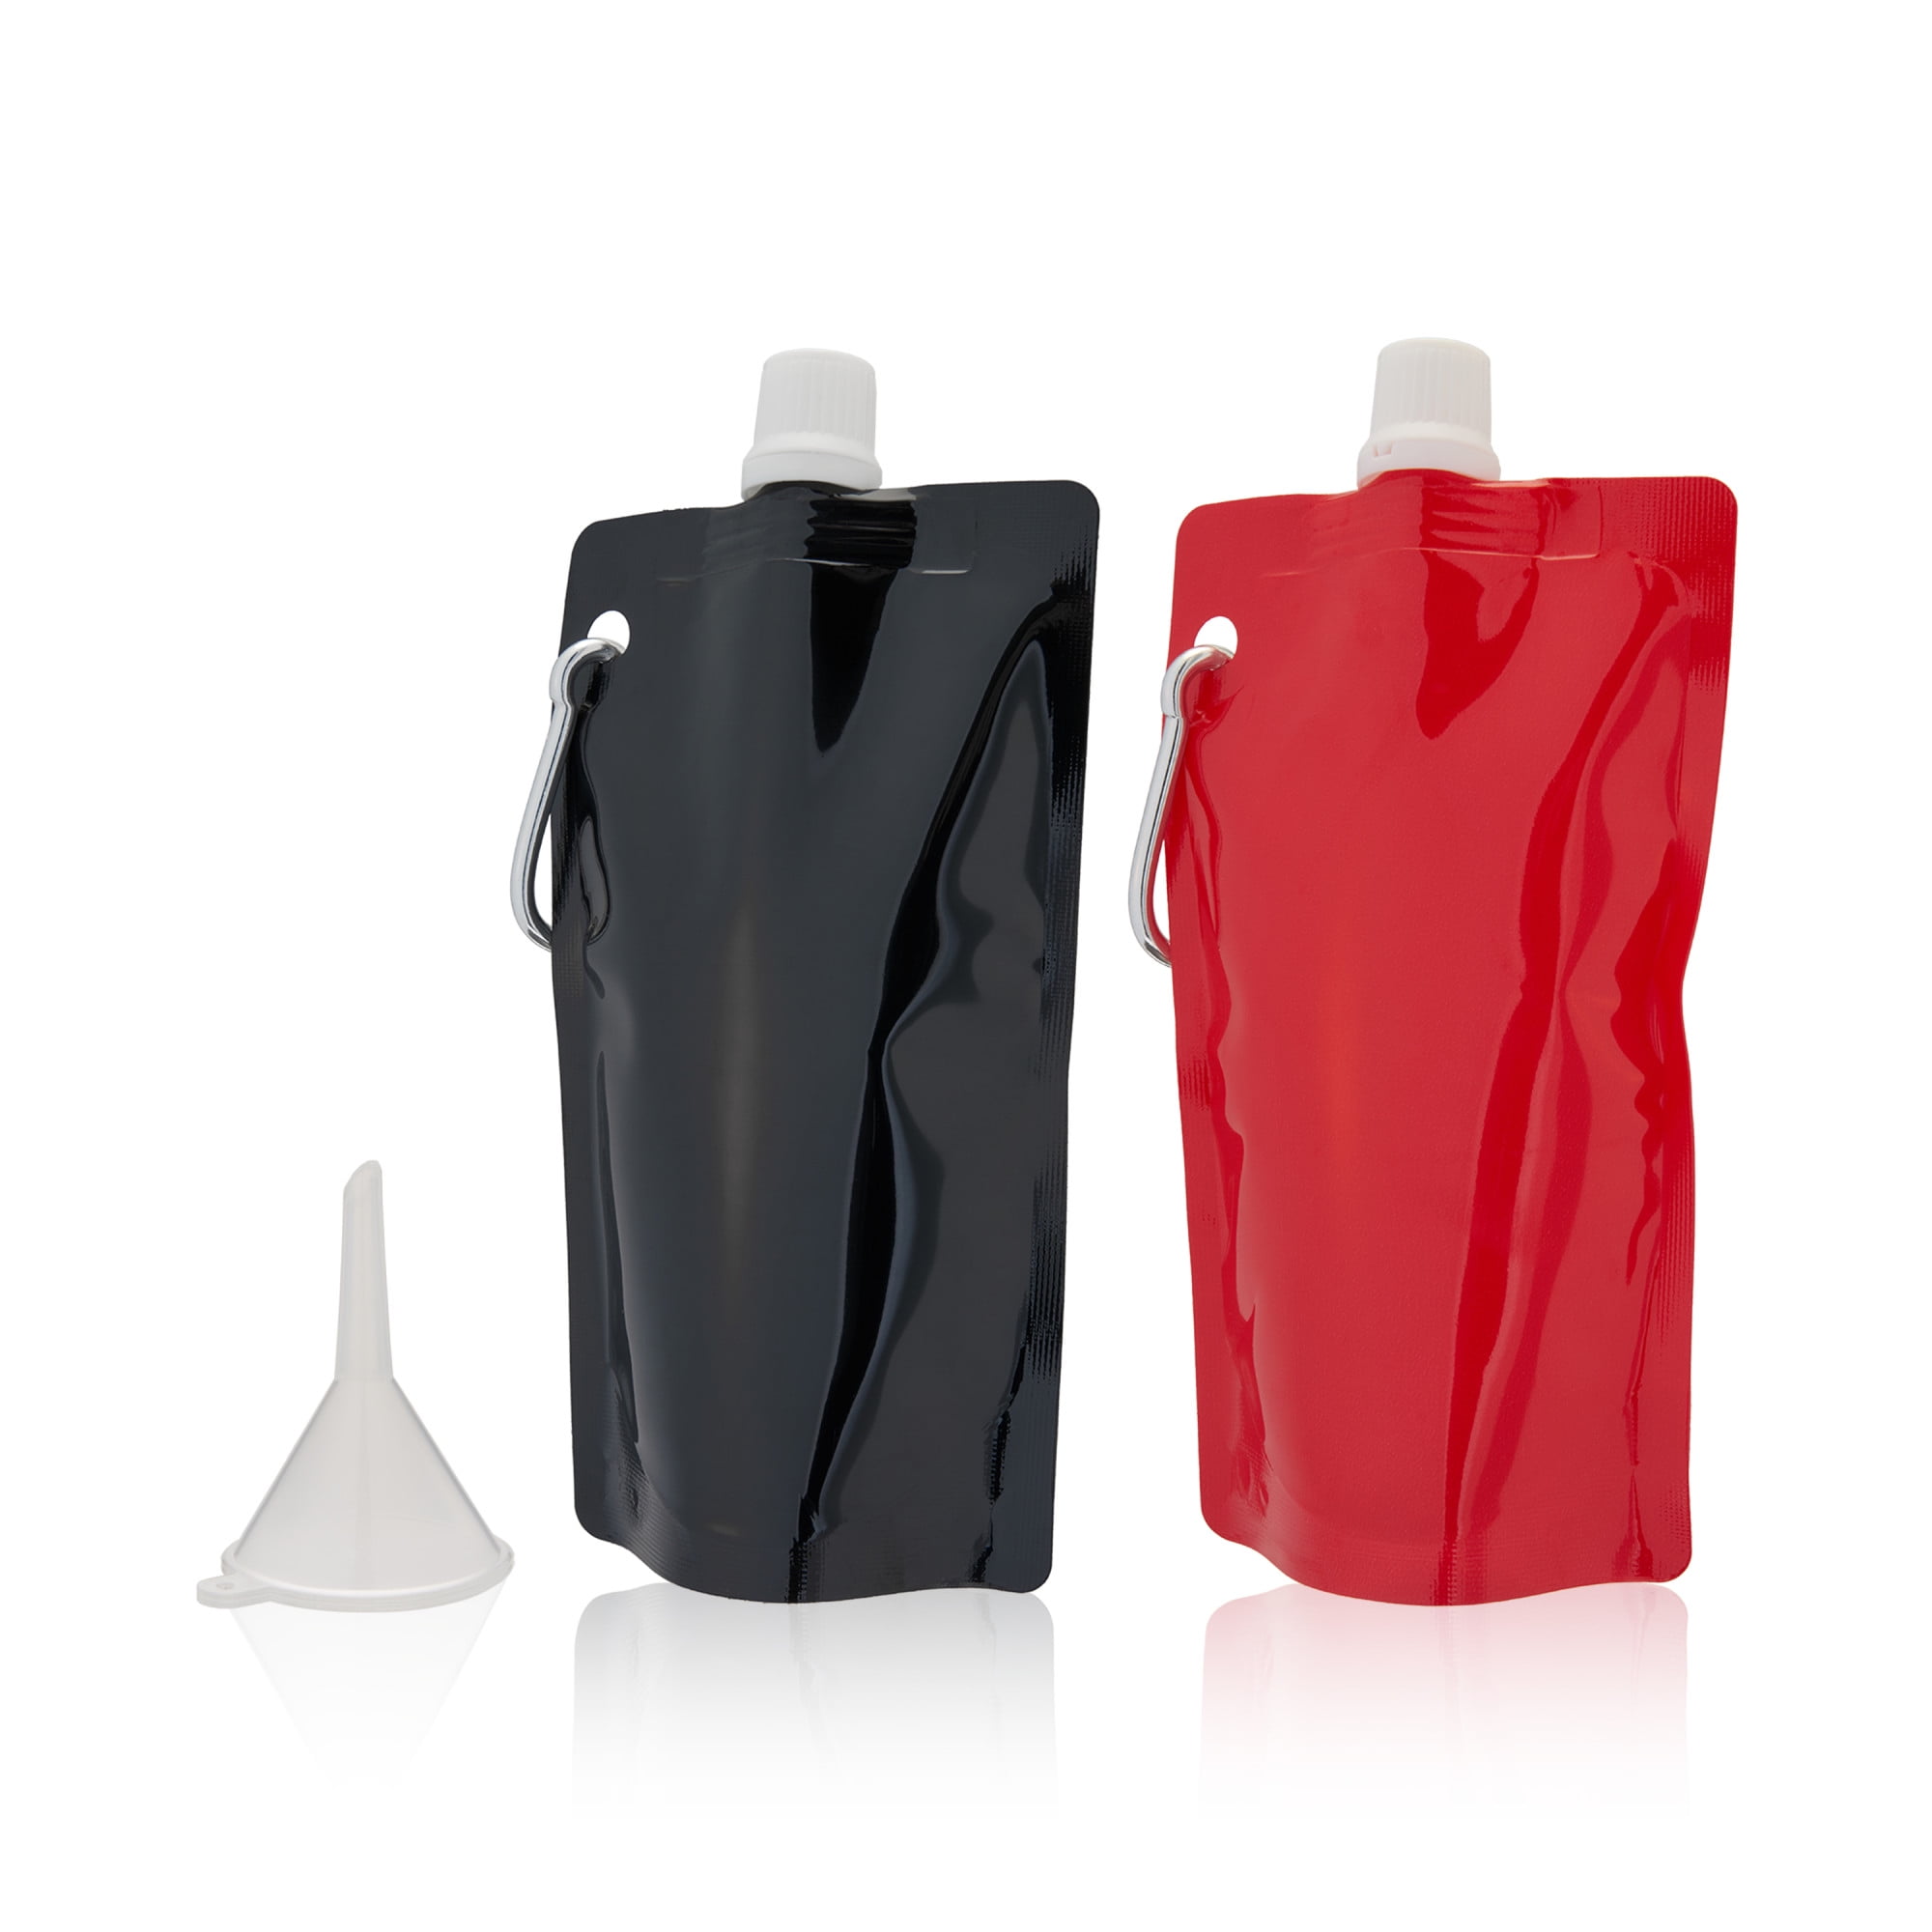 True Smuggle Plastic Flasks for Liquor - Hidden & Discreet